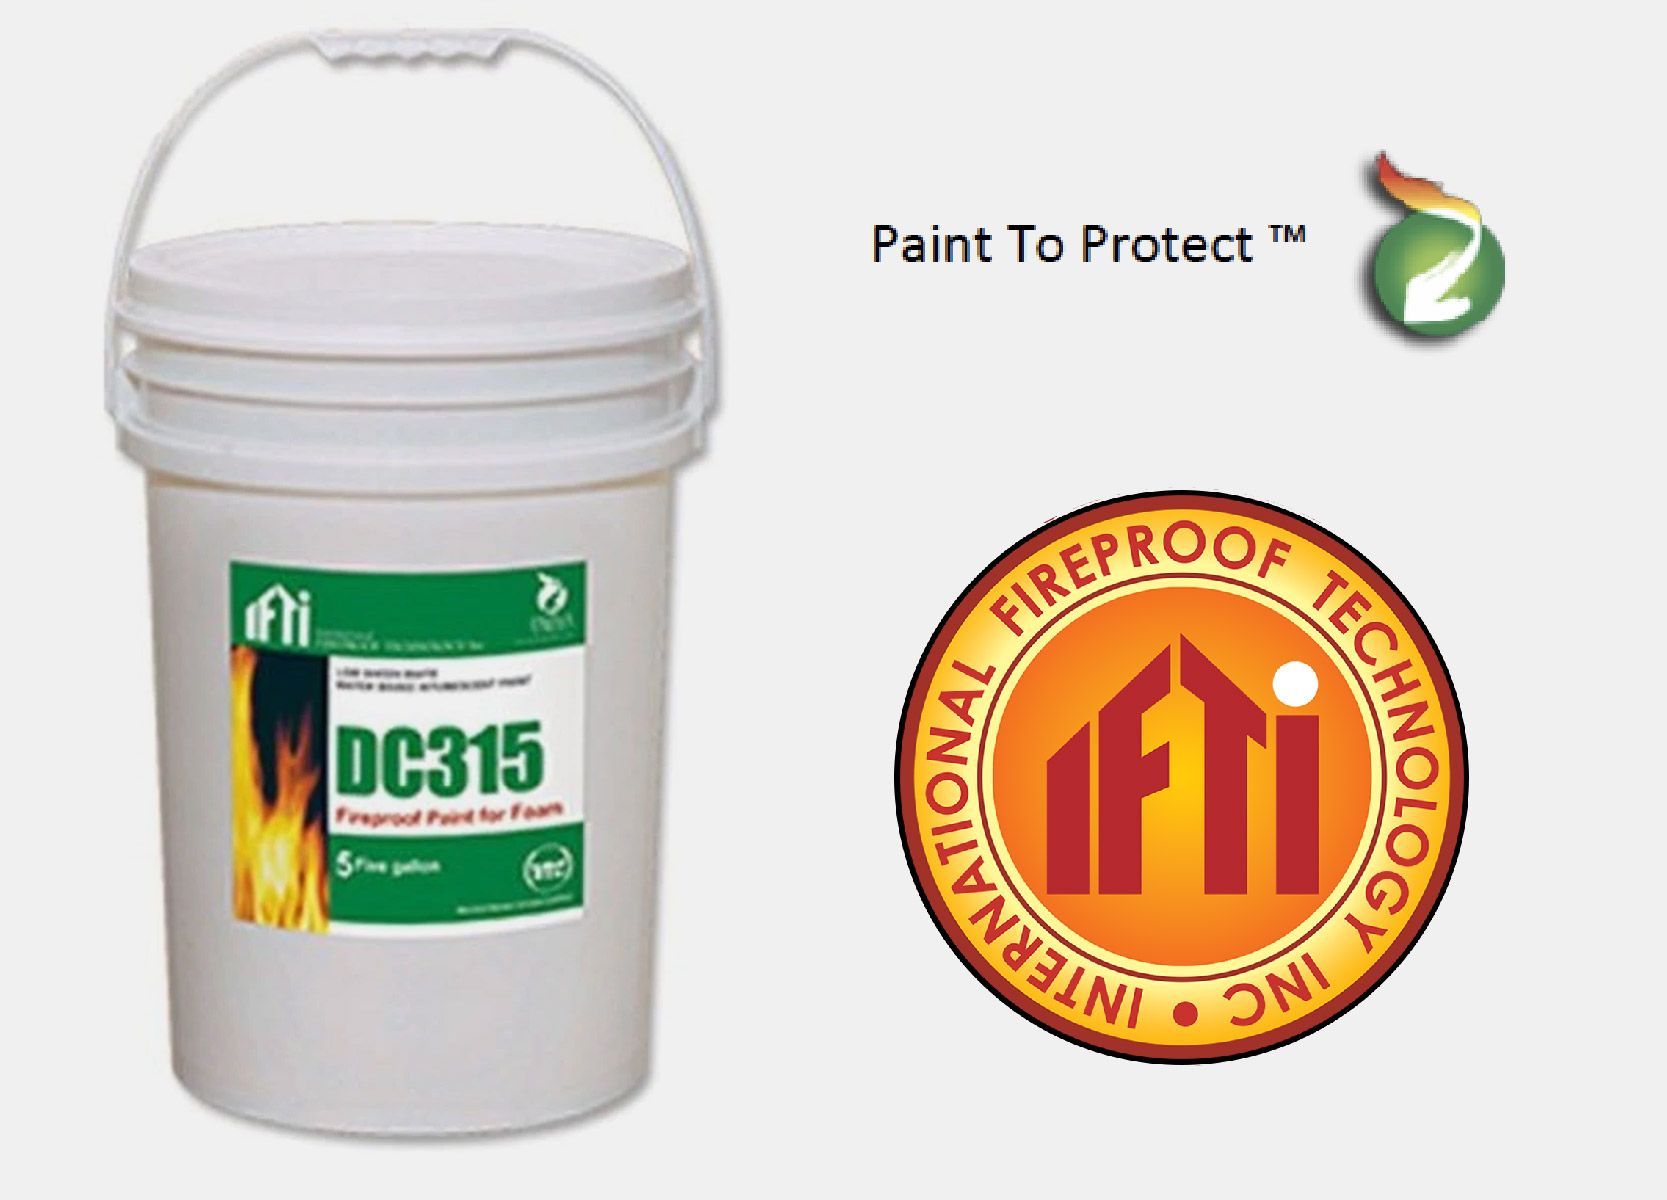 A bucket of dc315 fireproof technology paint